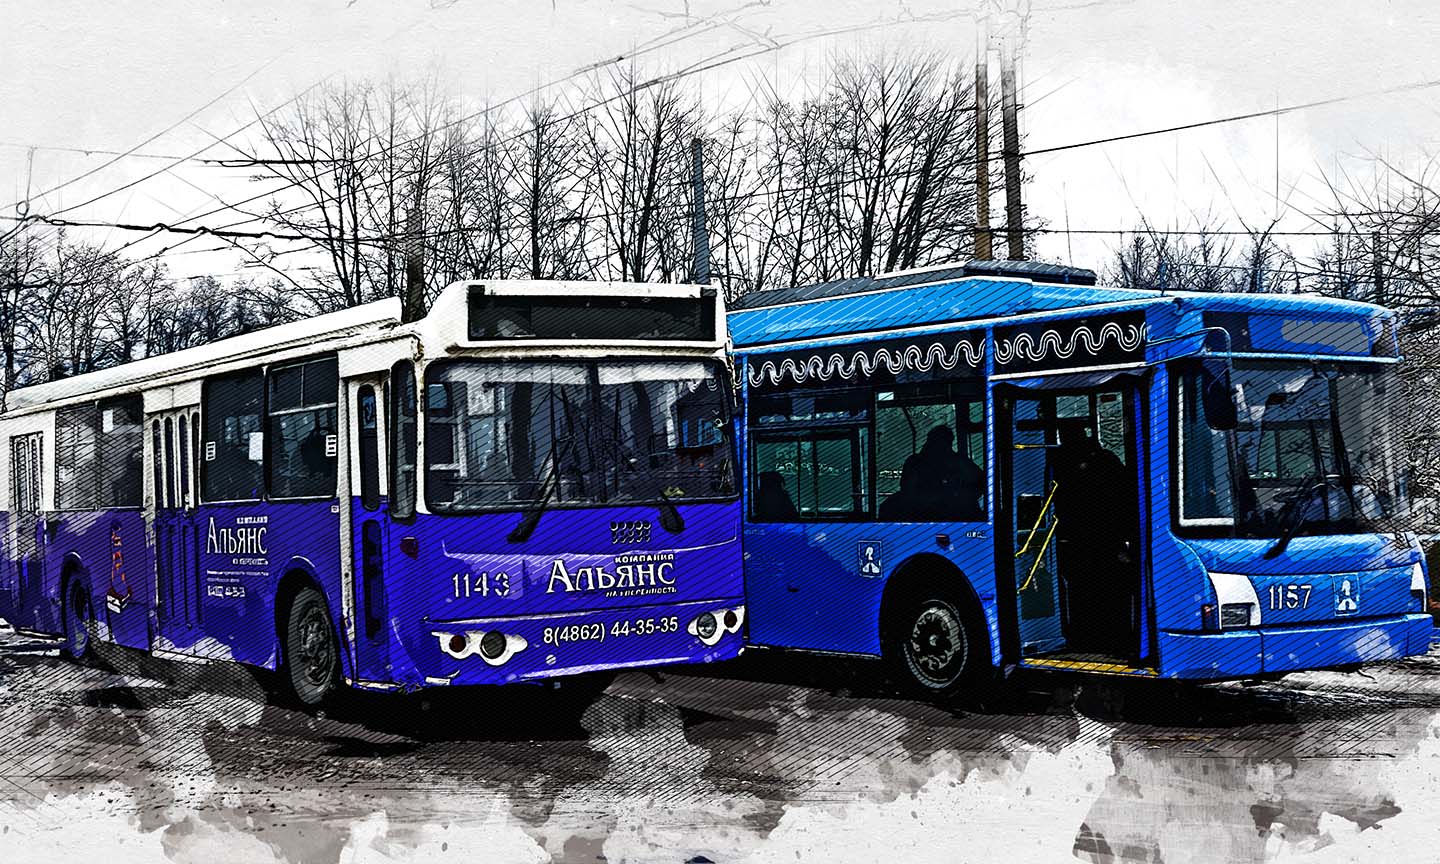 Автобус 4 троллейбус. Орел троллейбусное депо 2021. Троллейбусное депо Орел 022. МУП трамвайно-троллейбусное предприятие Орел. Троллейбус в Москве 2022.